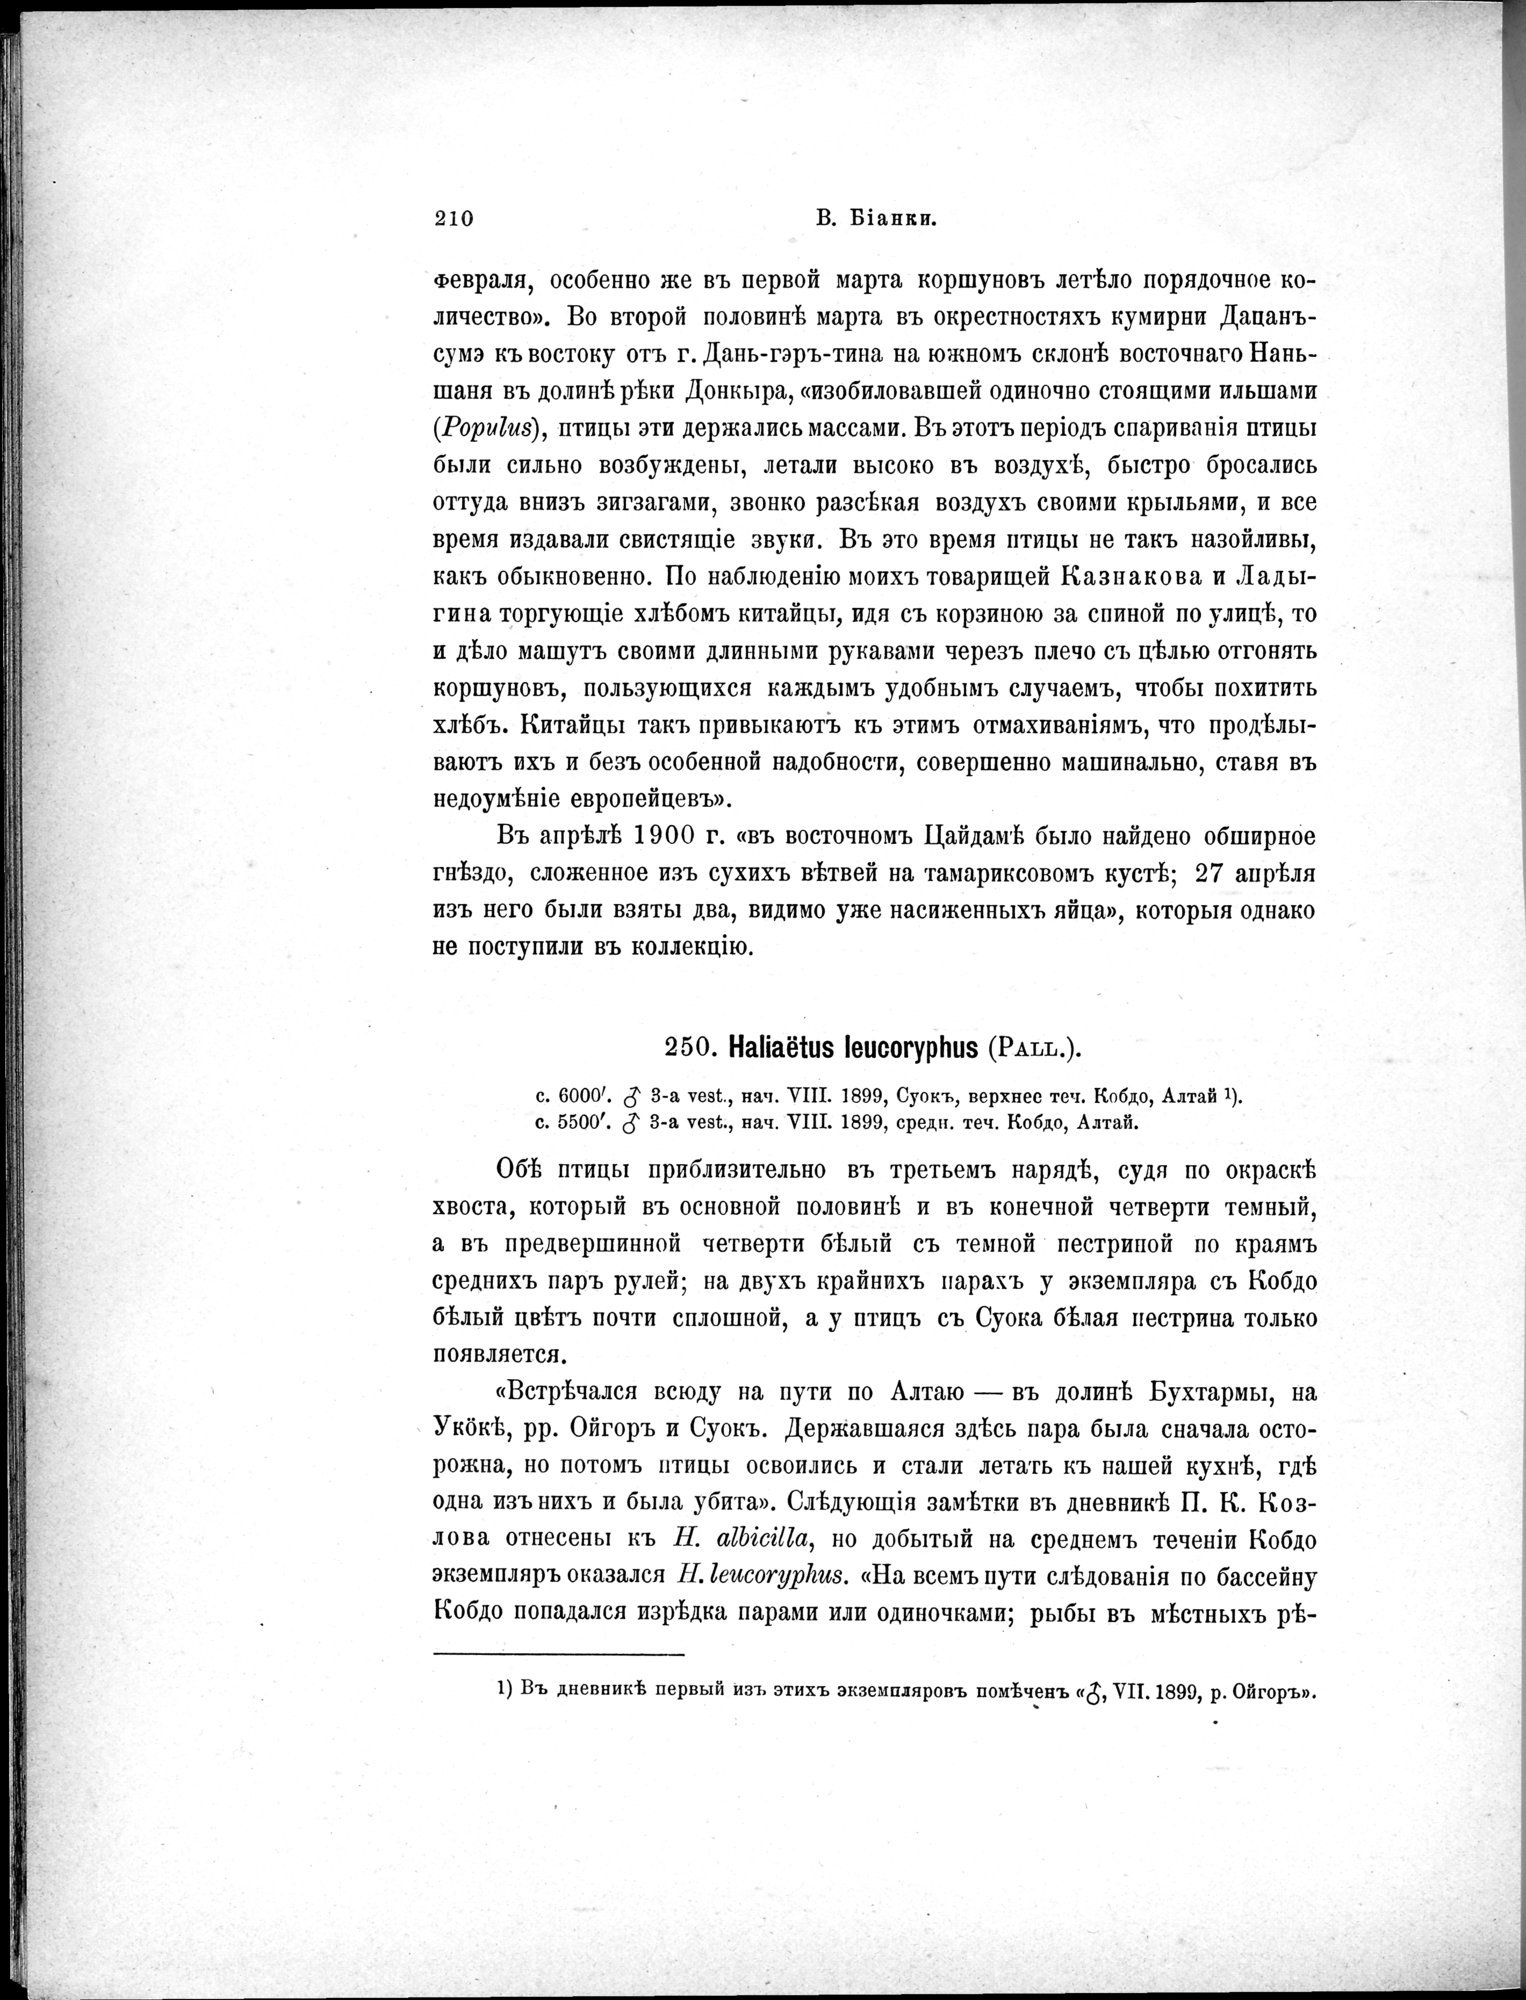 Mongoliia i Kam : vol.5 / Page 282 (Grayscale High Resolution Image)